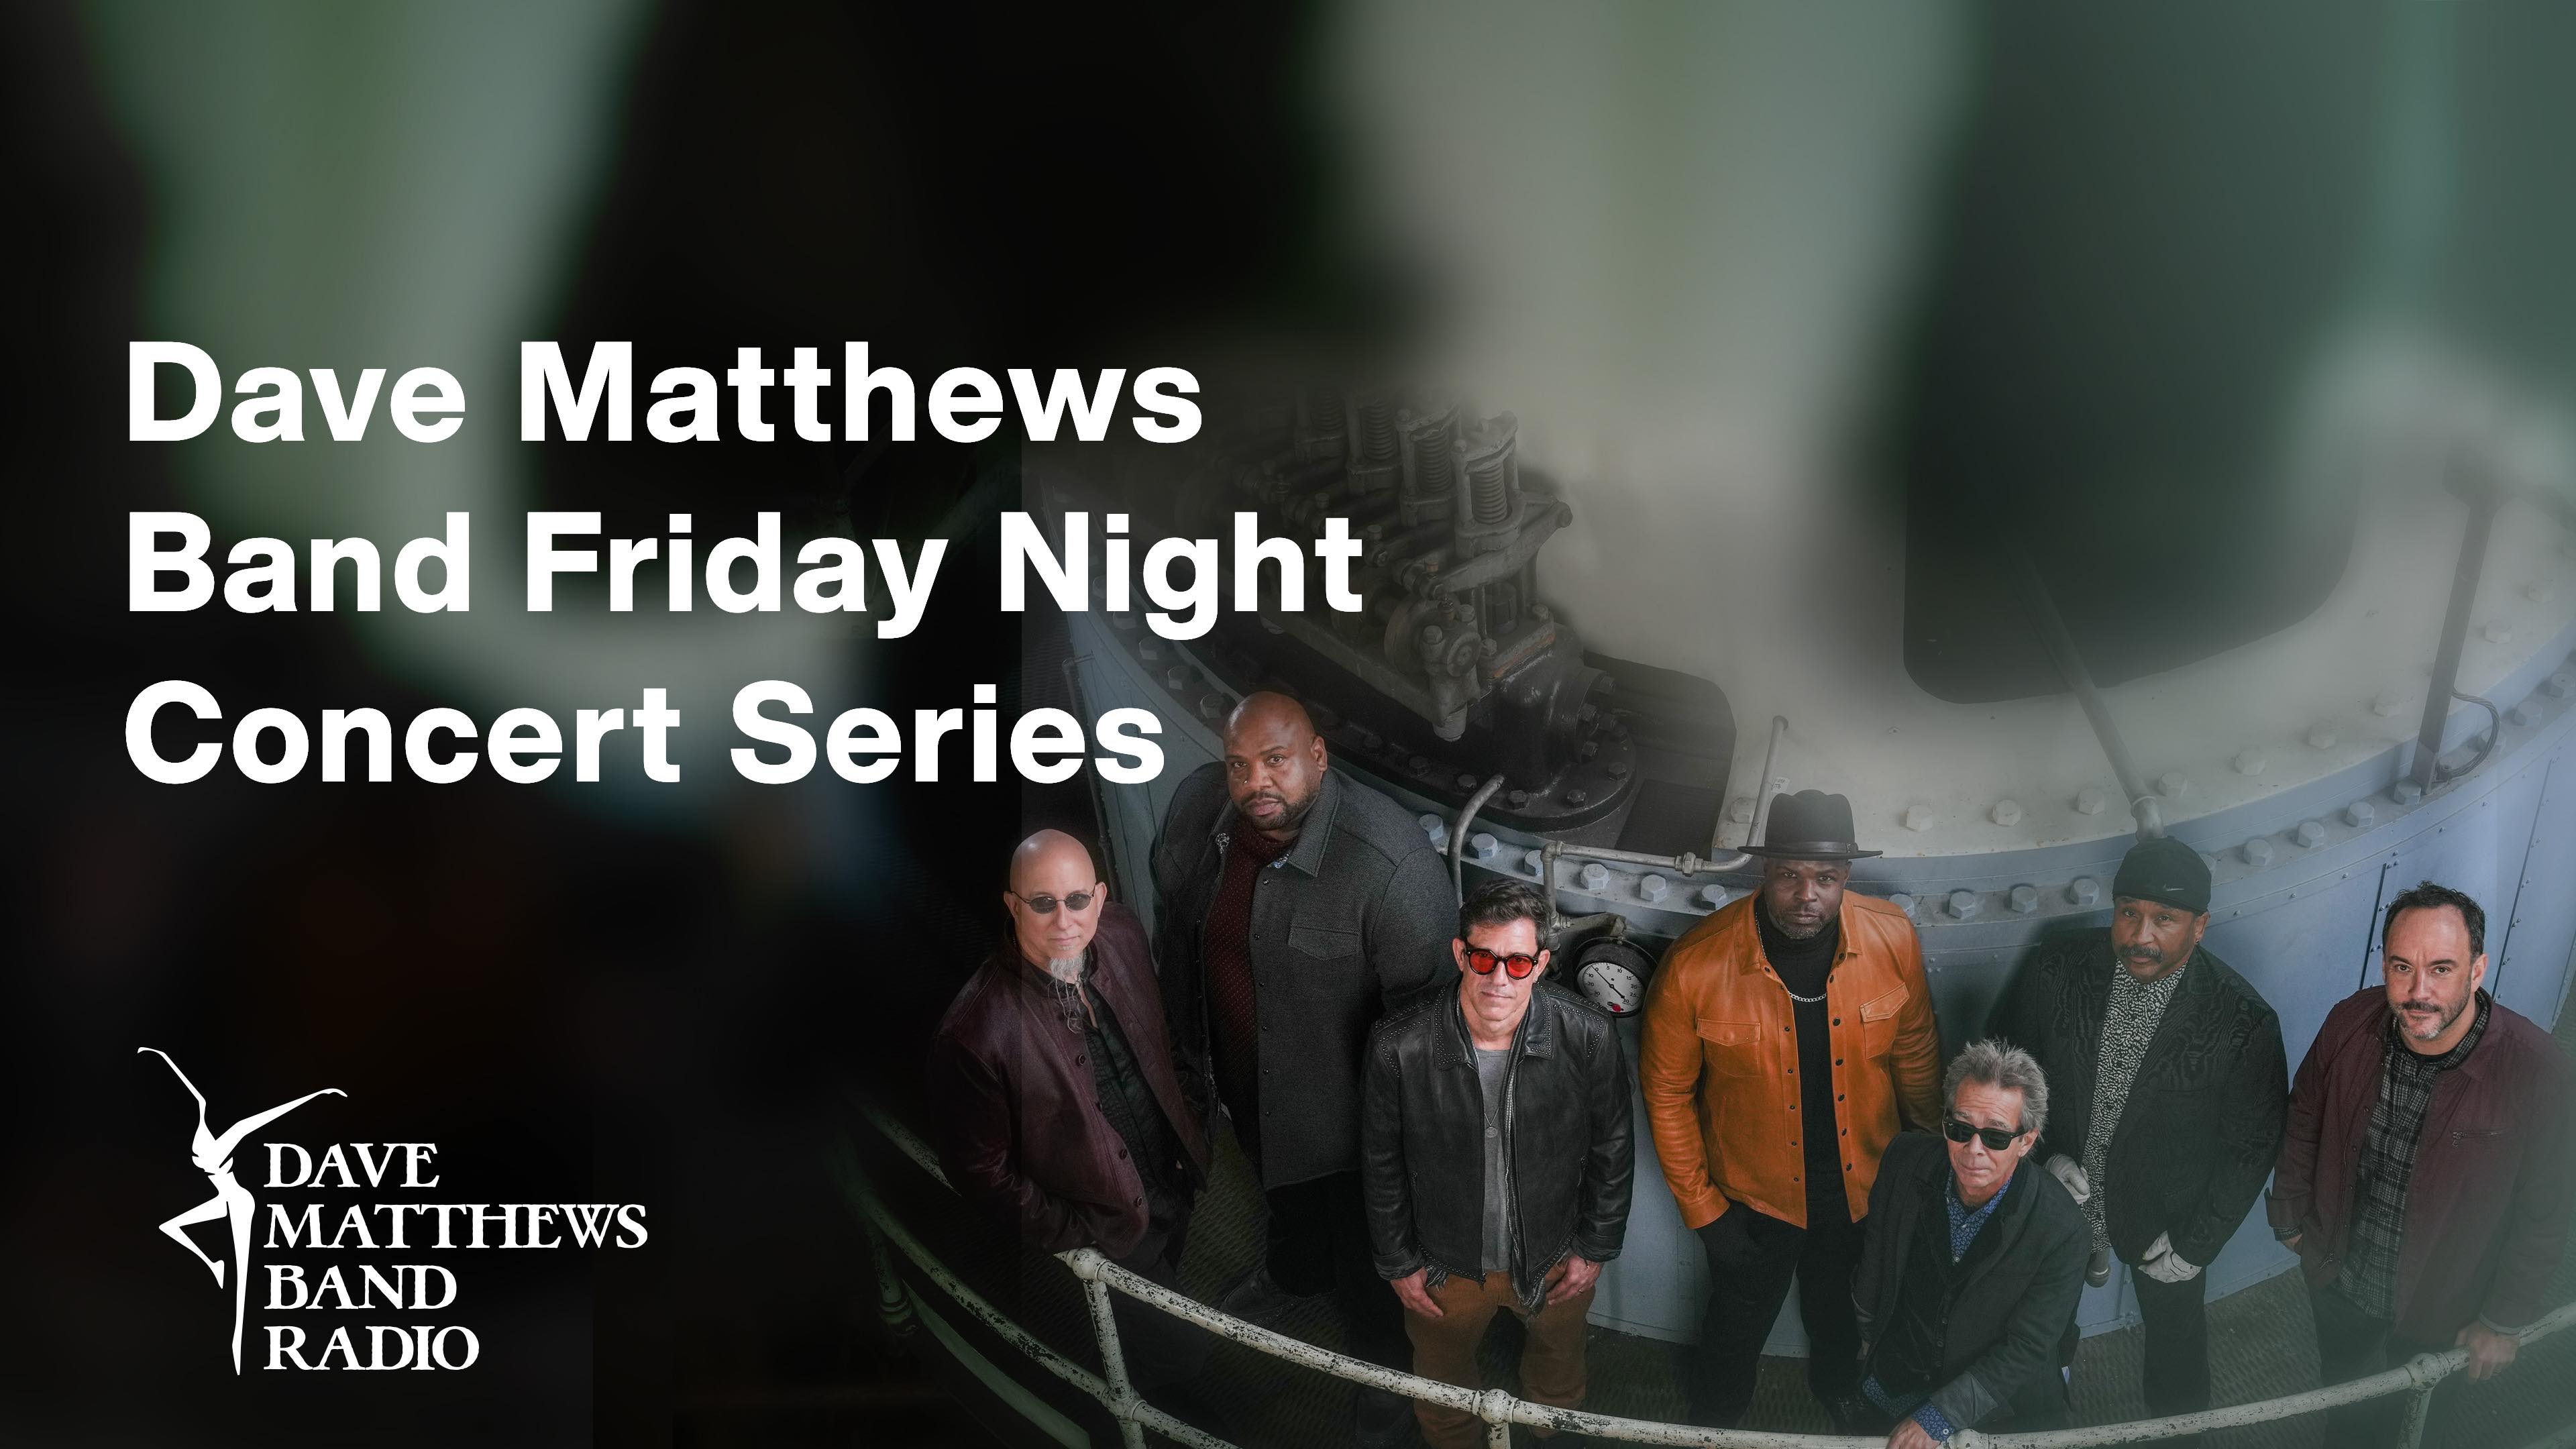 Dave Matthews Band Friday Night Concert Series on SiriusXM's Dave Matthews Band Radio channel